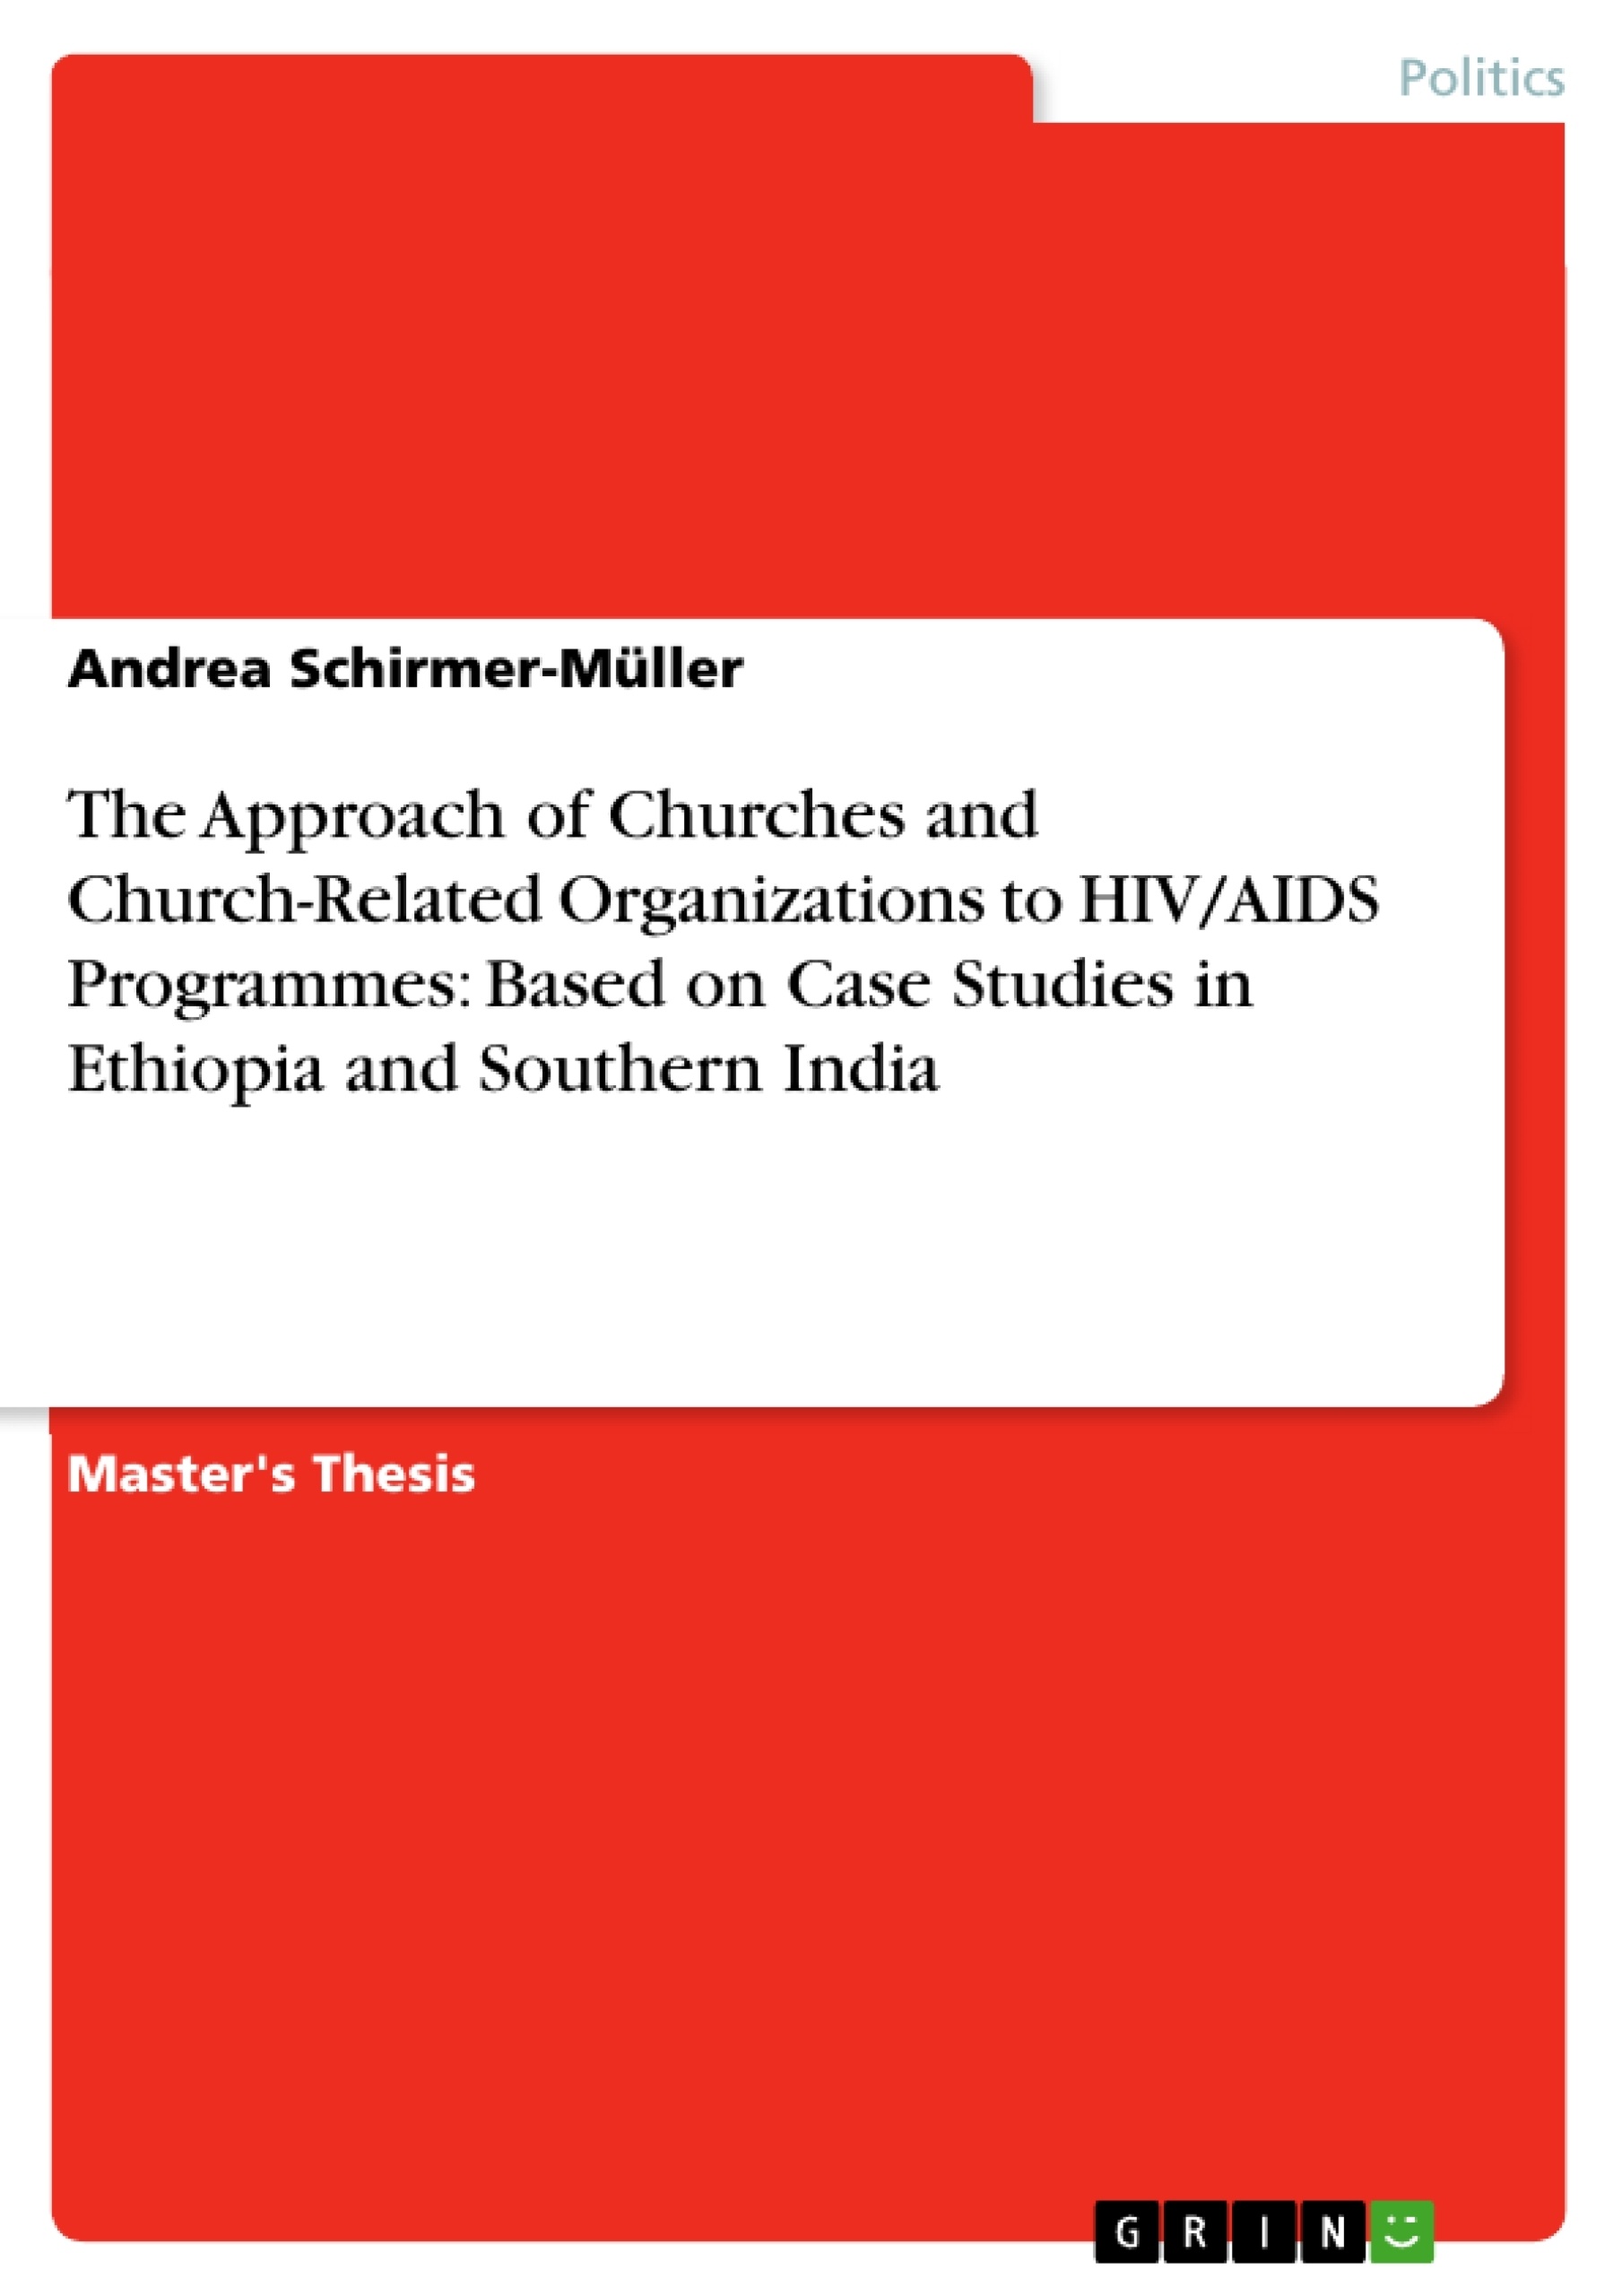 Dissertation qualitative hiv aids